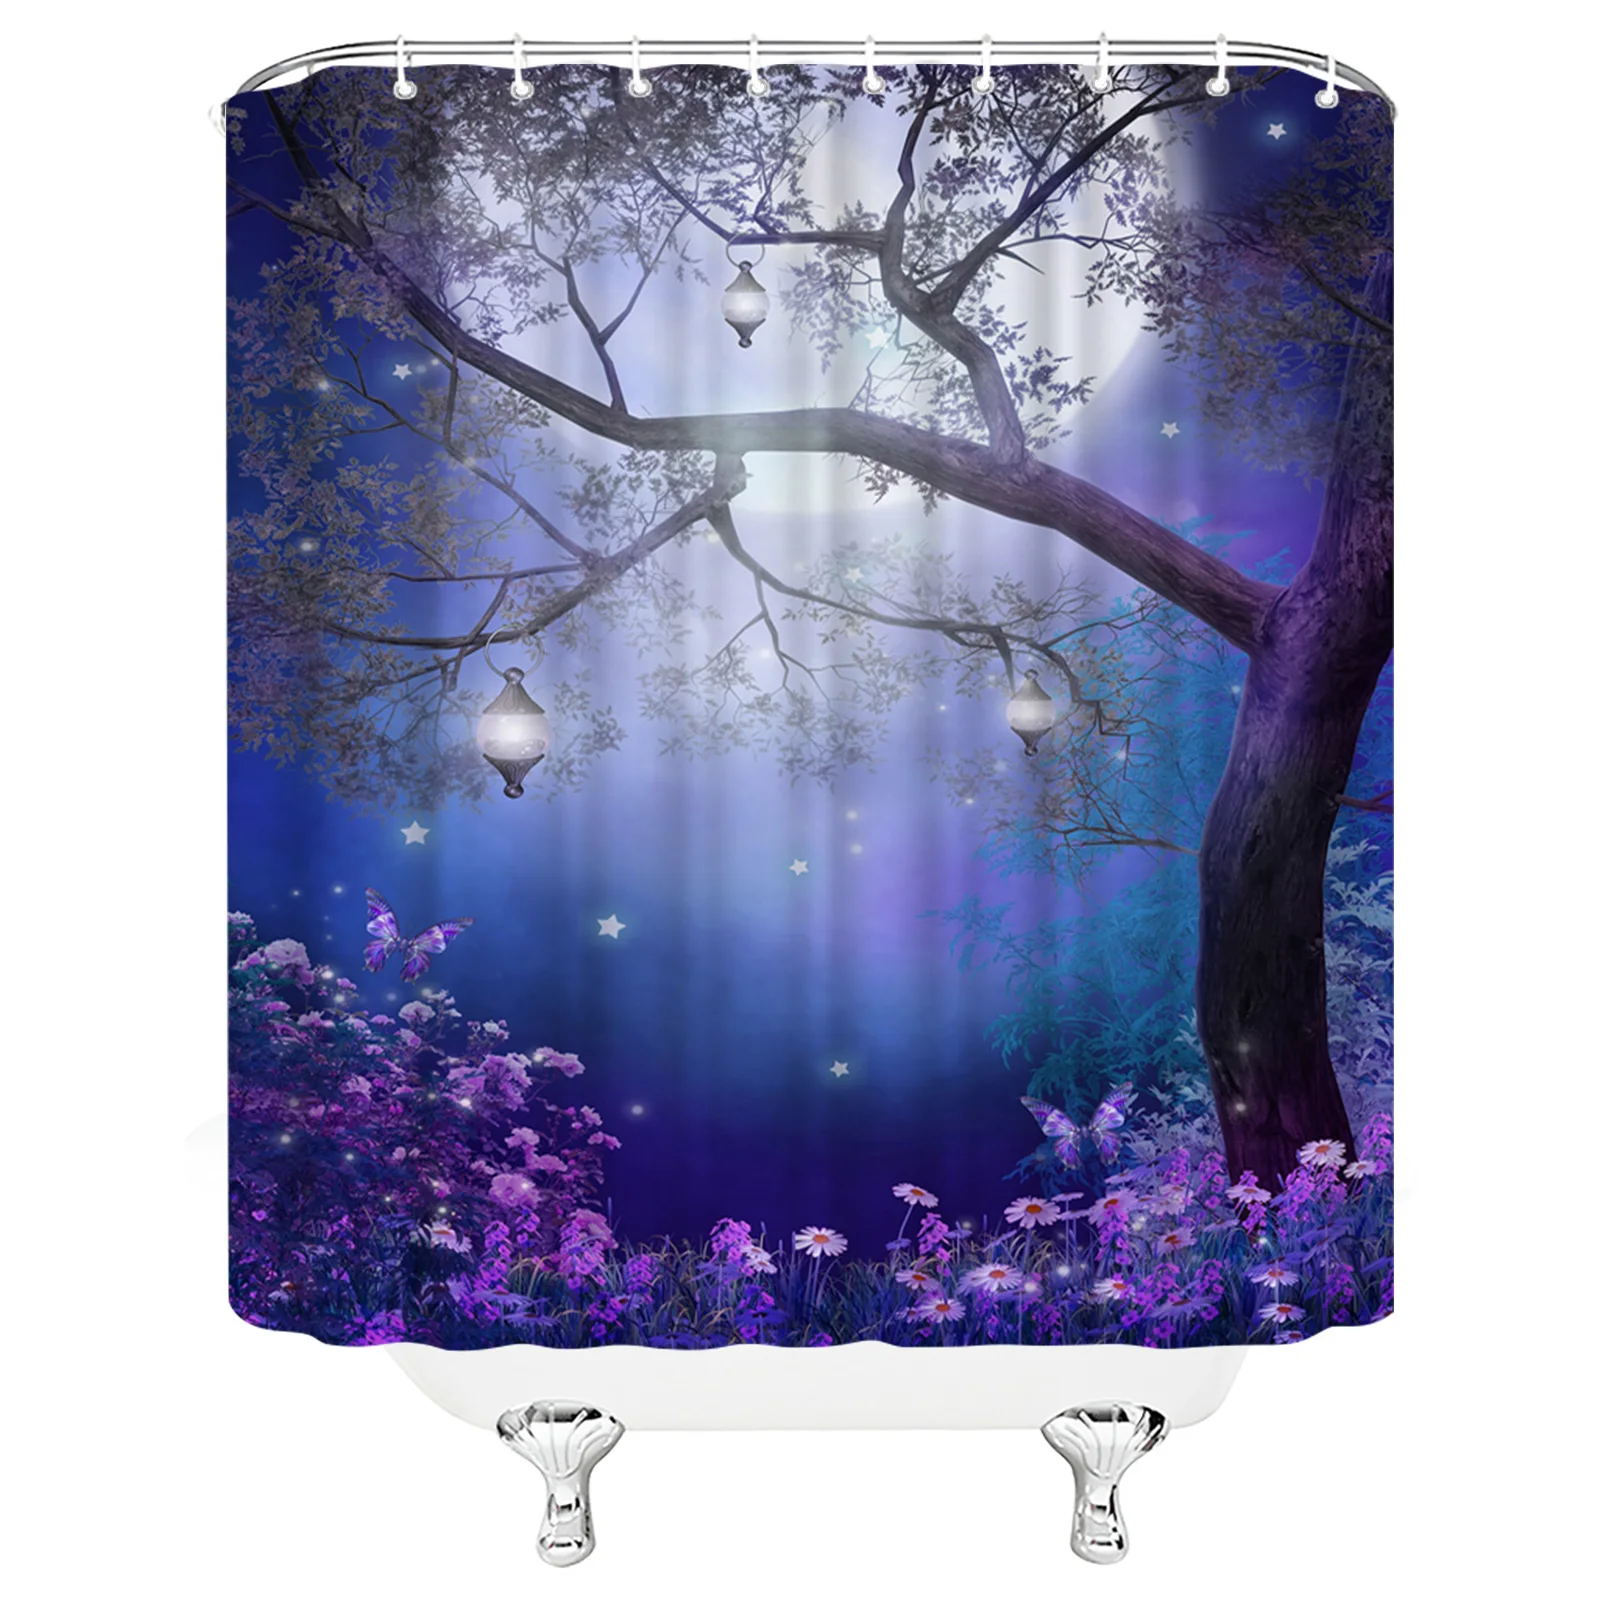 

Creative Design Nigh Beautiful Forest Tree Flower Starry Landscape Image Washroom Bathroom Shower Curtain, Customized color